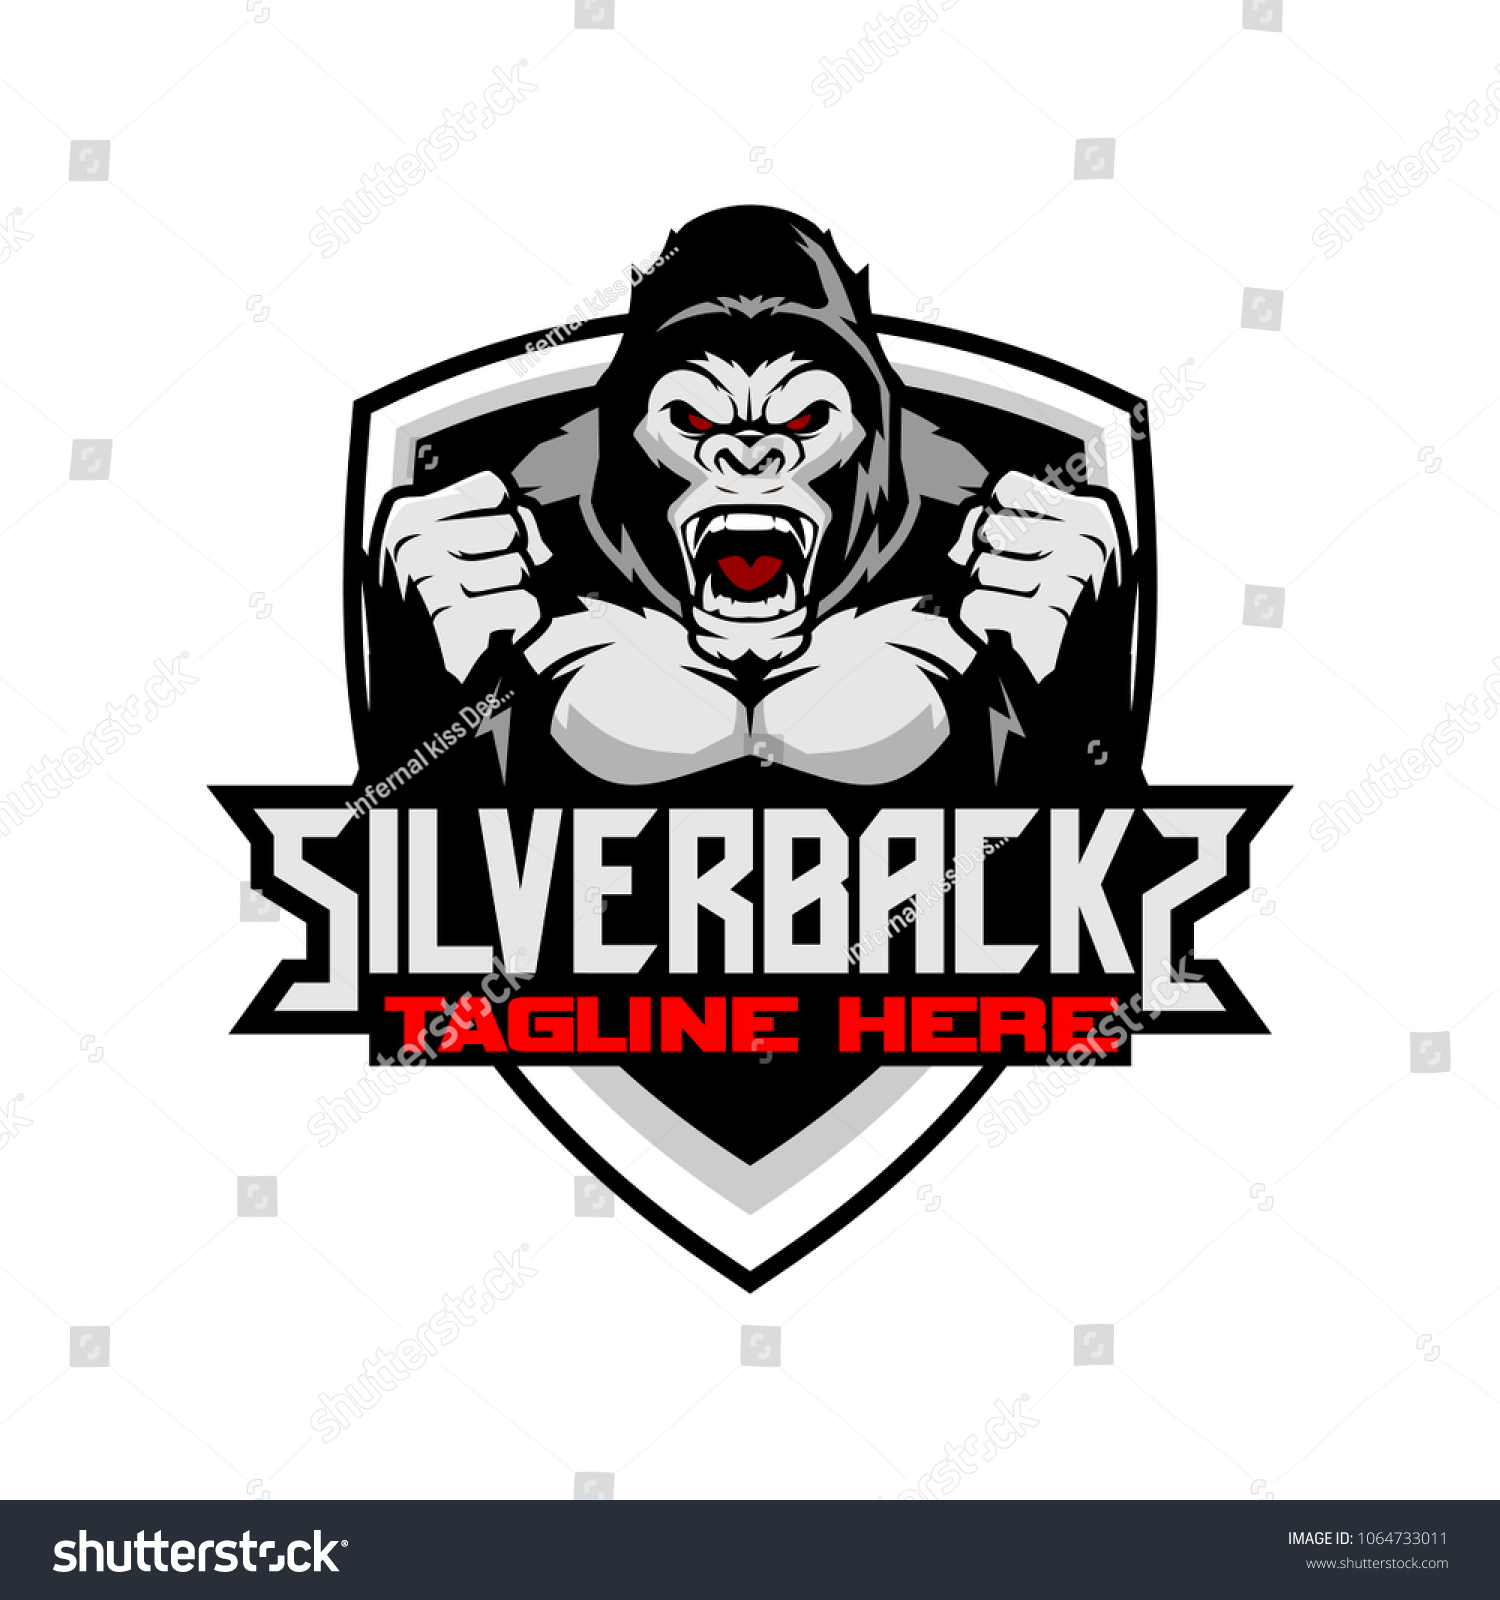 Silverback Gorilla Animal Vector Logo Template: стоковая векторная графика ...